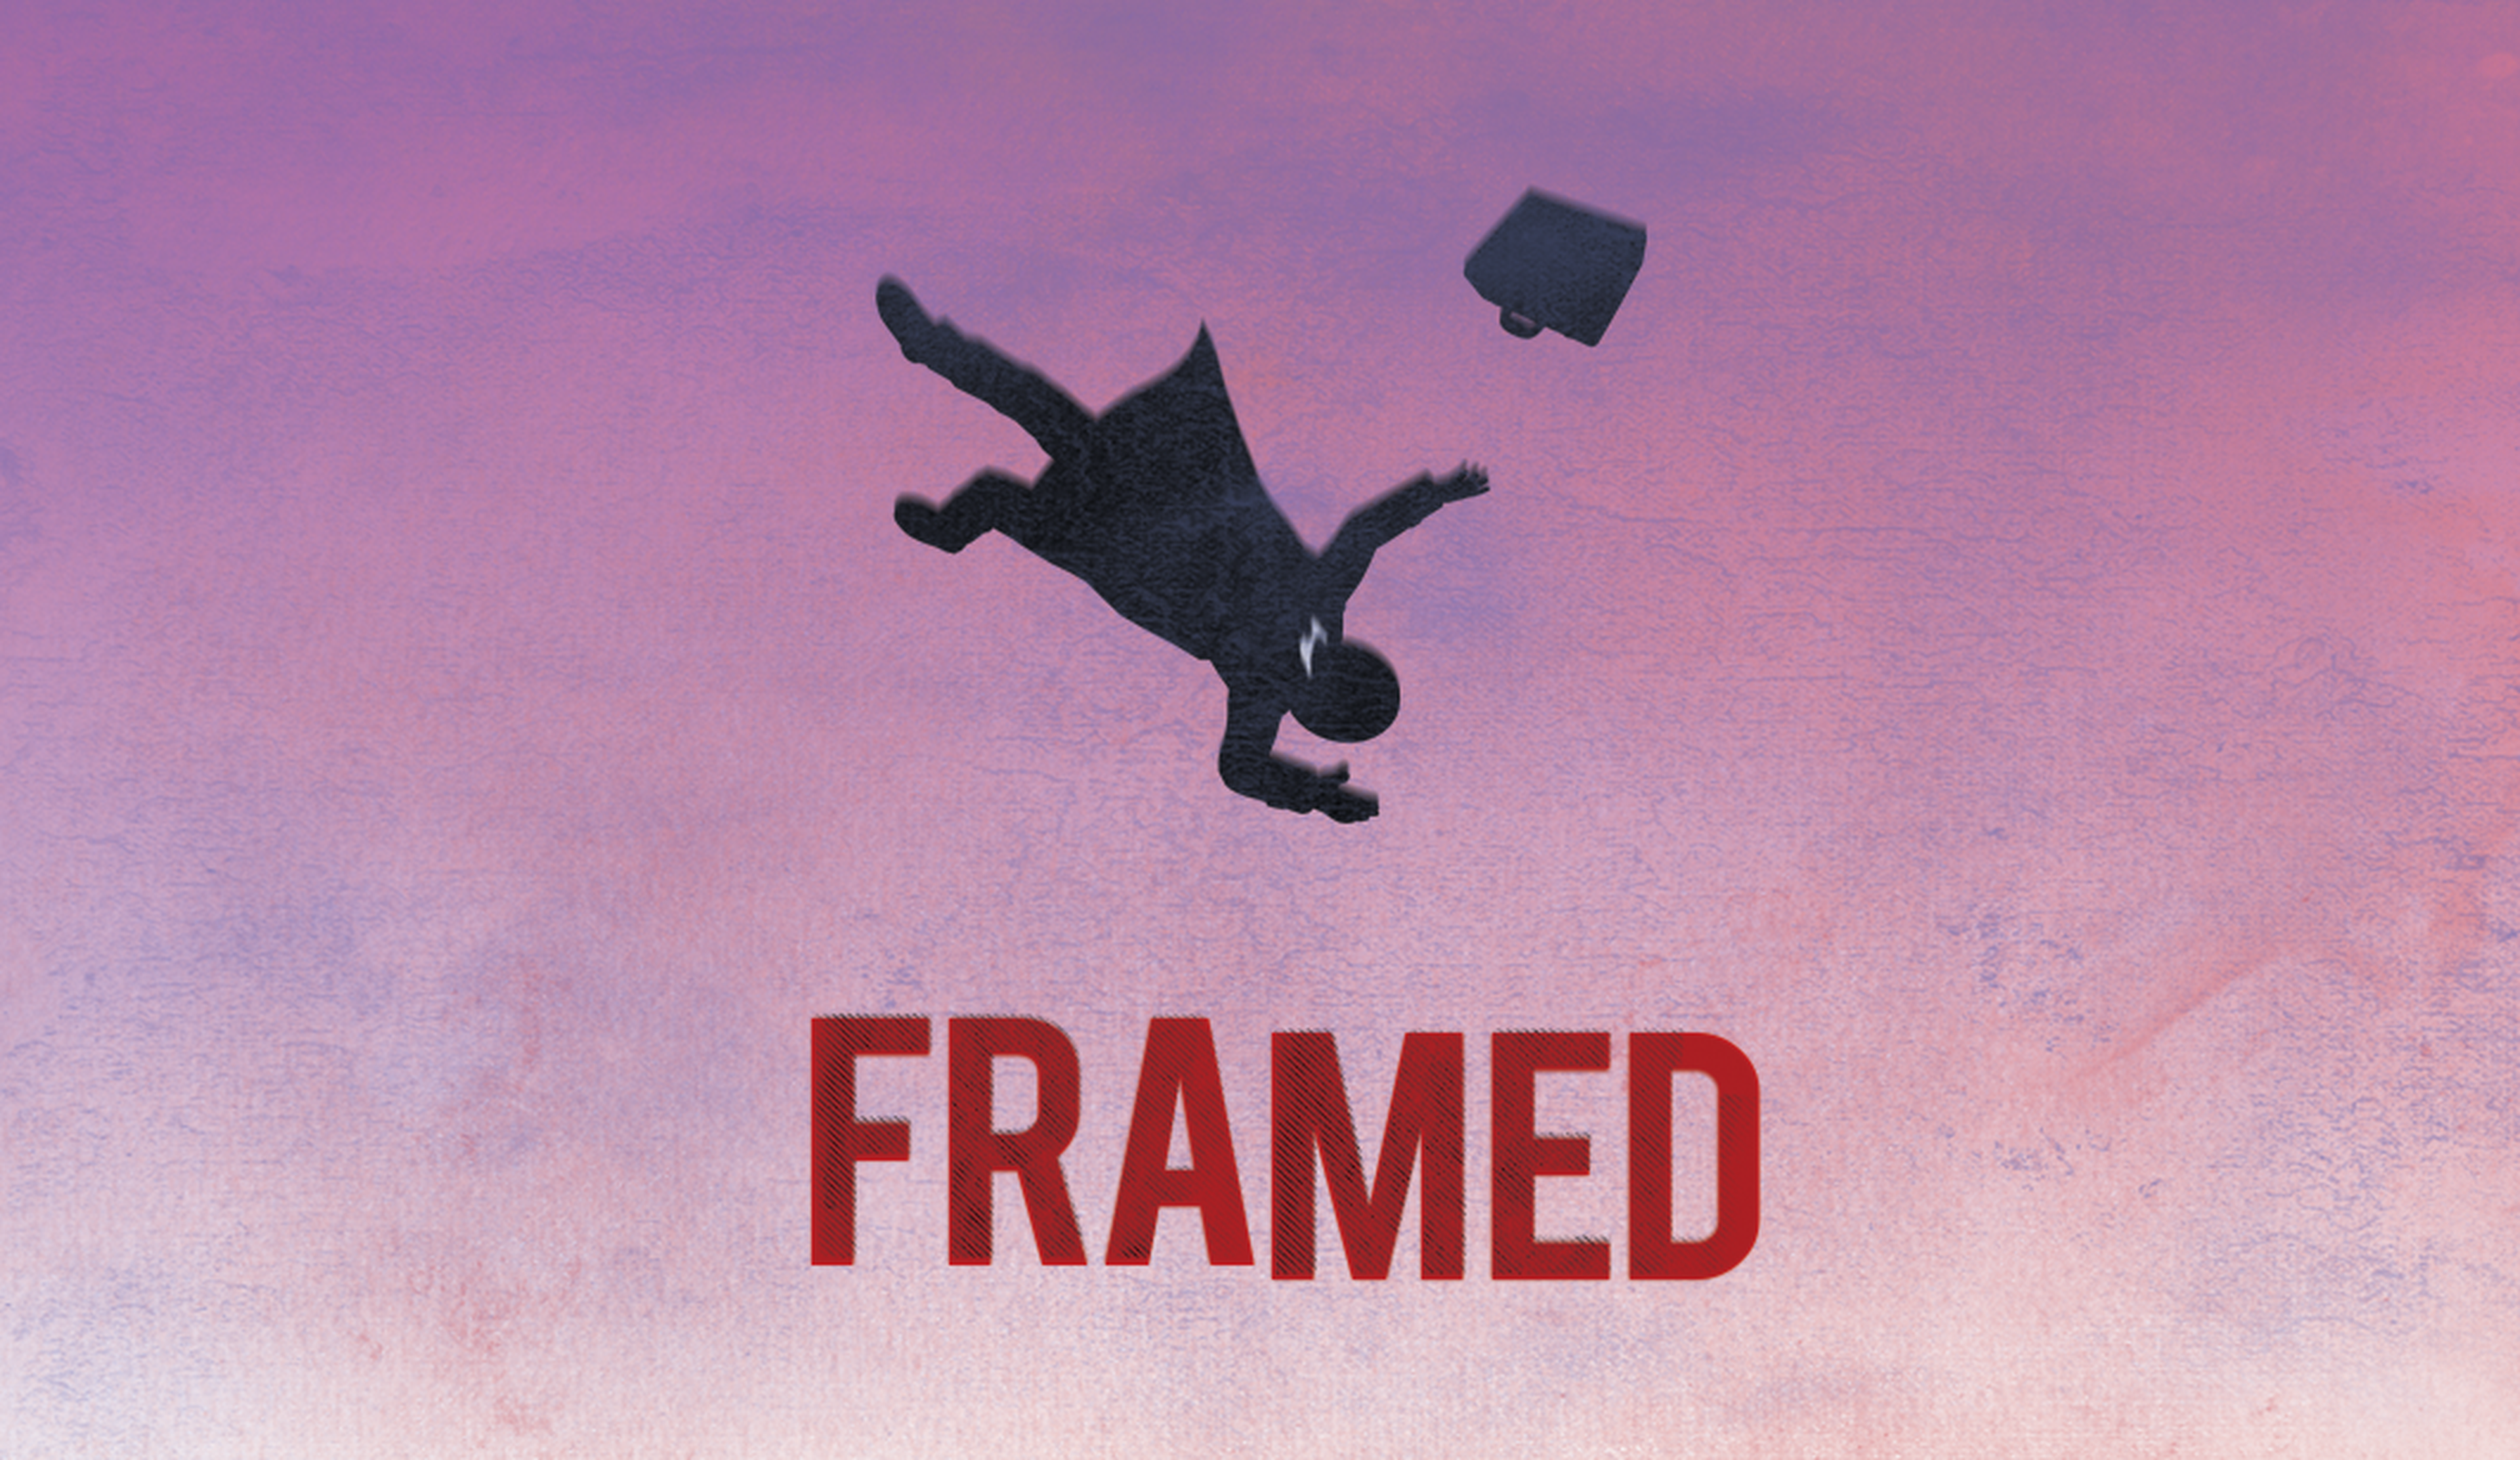 Framed es el GOTY 2014 de Hideo Kojima